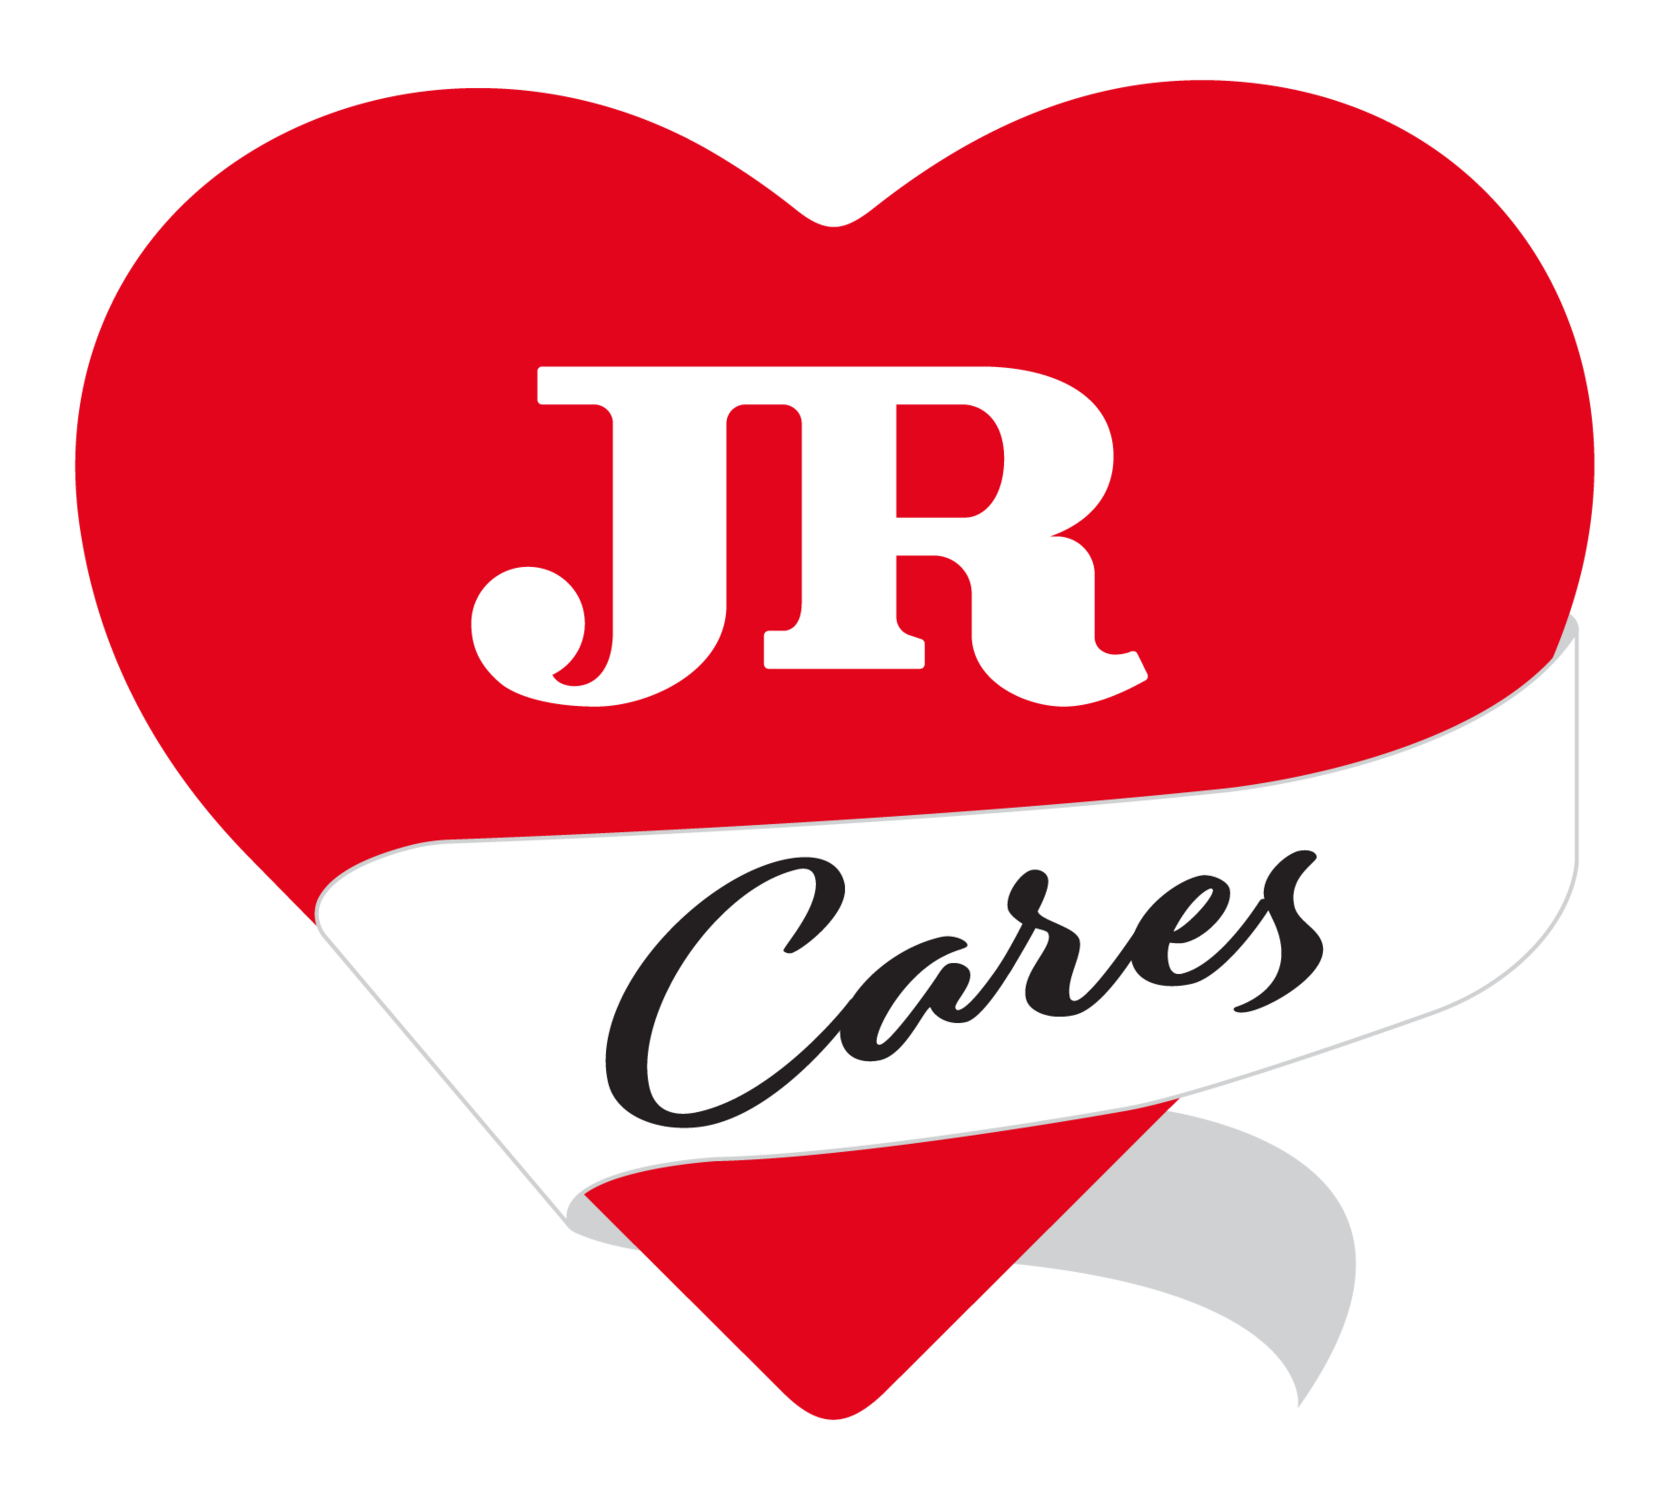 JR cares logo